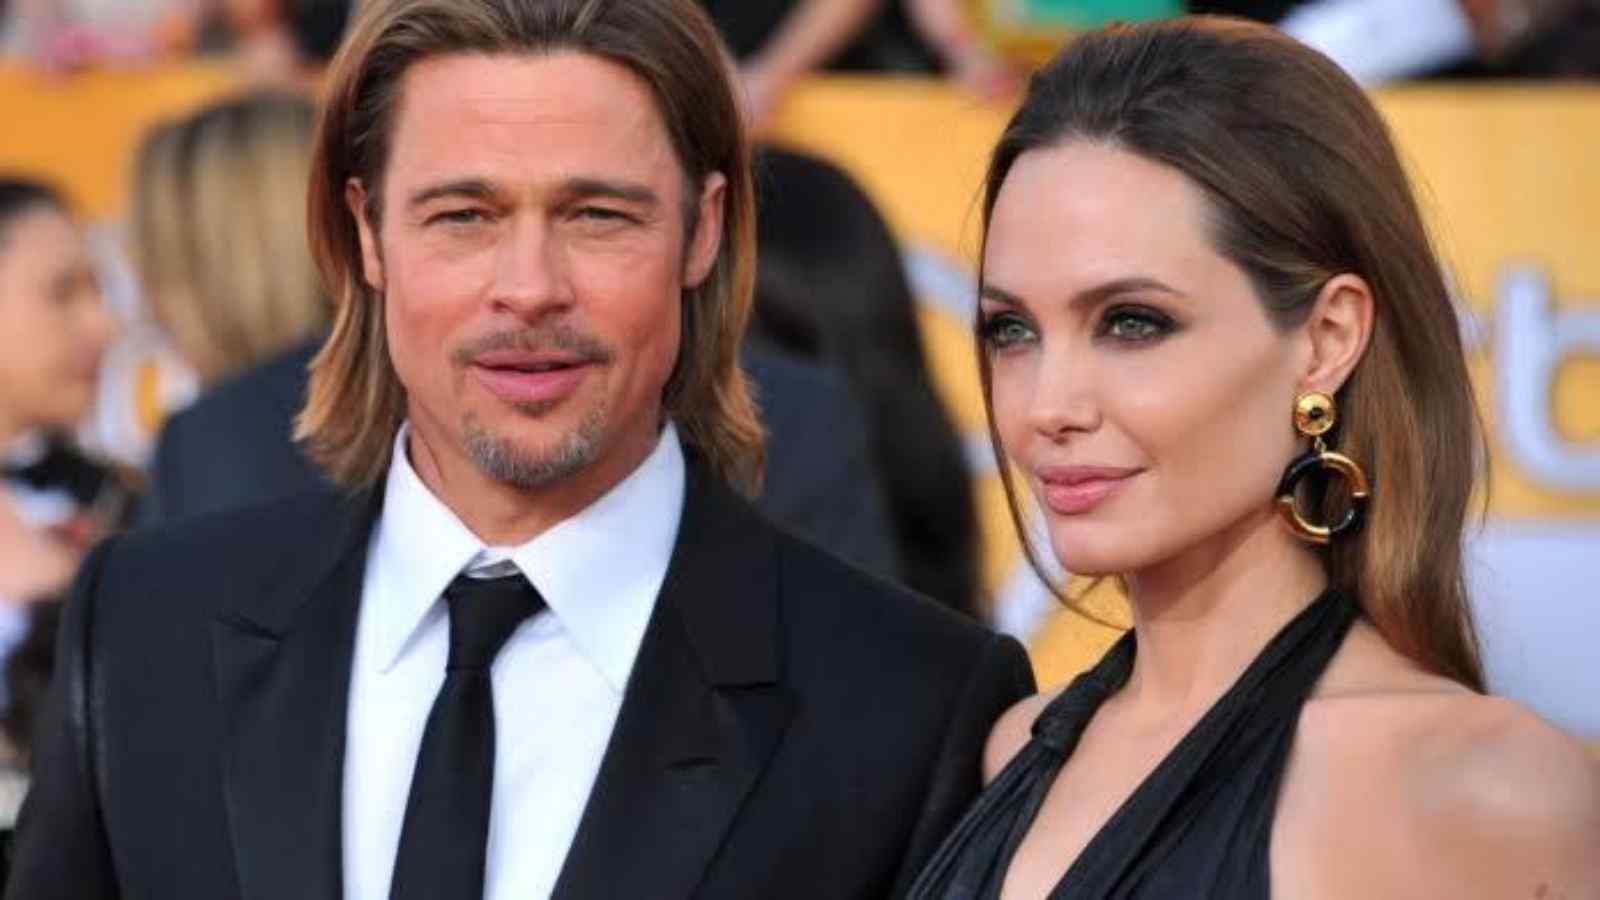 What all celebrities did Angelina Jolie date before Brad Pitt?